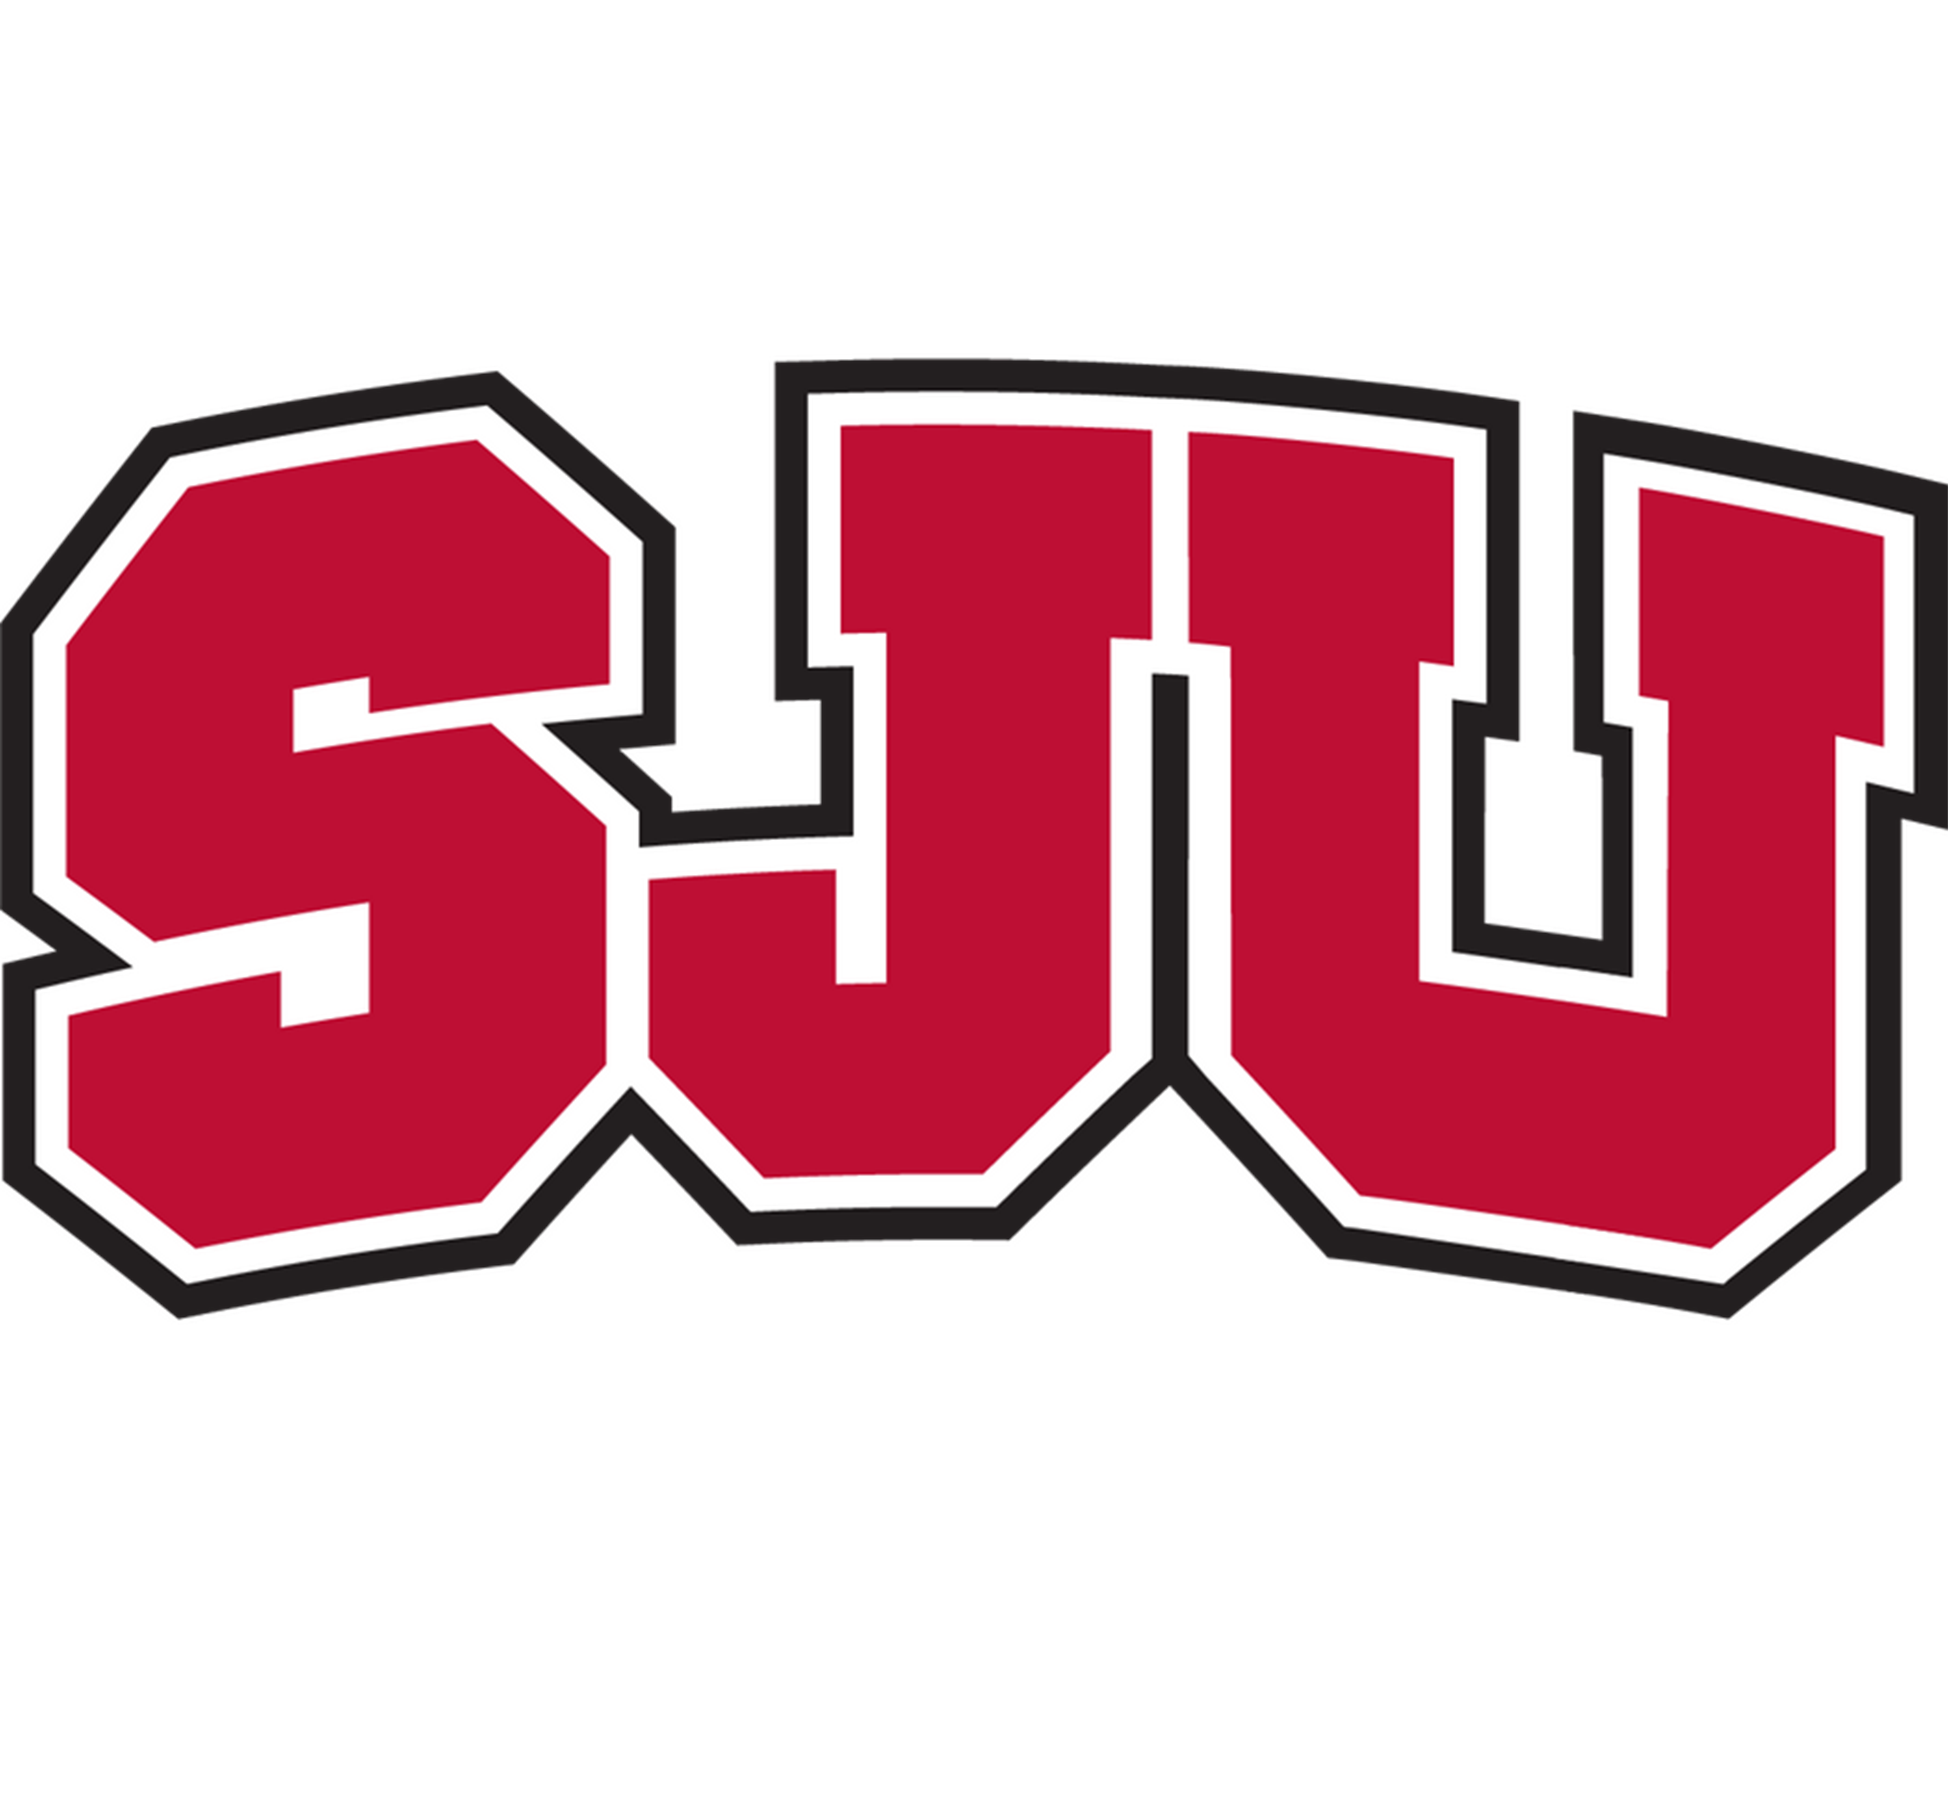 Saint John's University logo